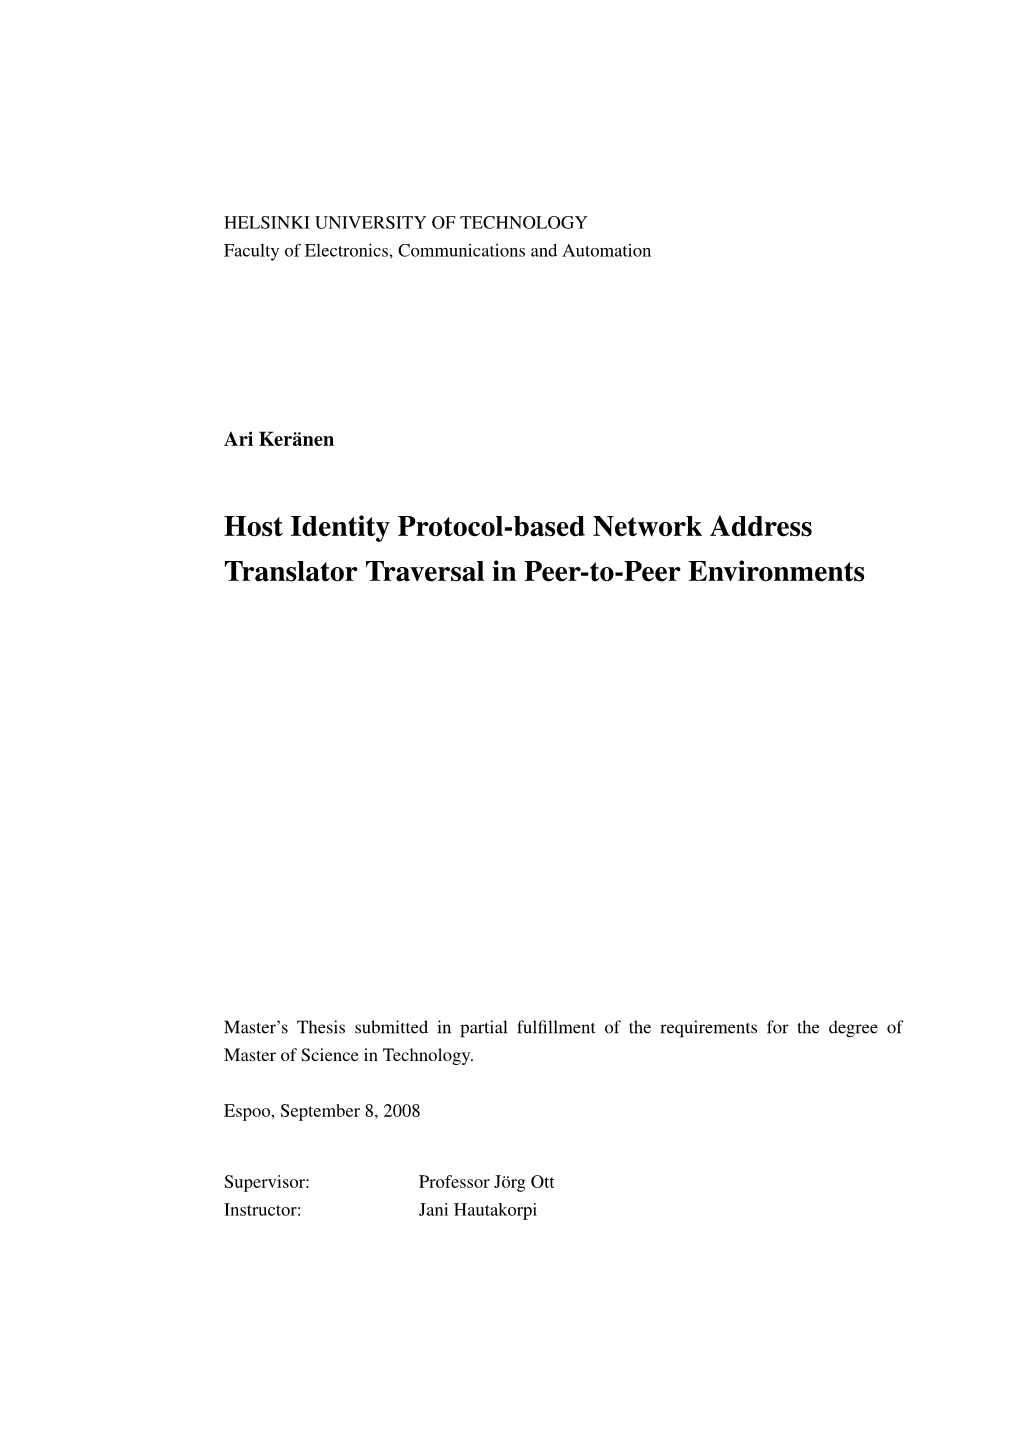 Host Identity Protocol-Based Network Address Translator Traversal in Peer-To-Peer Environments